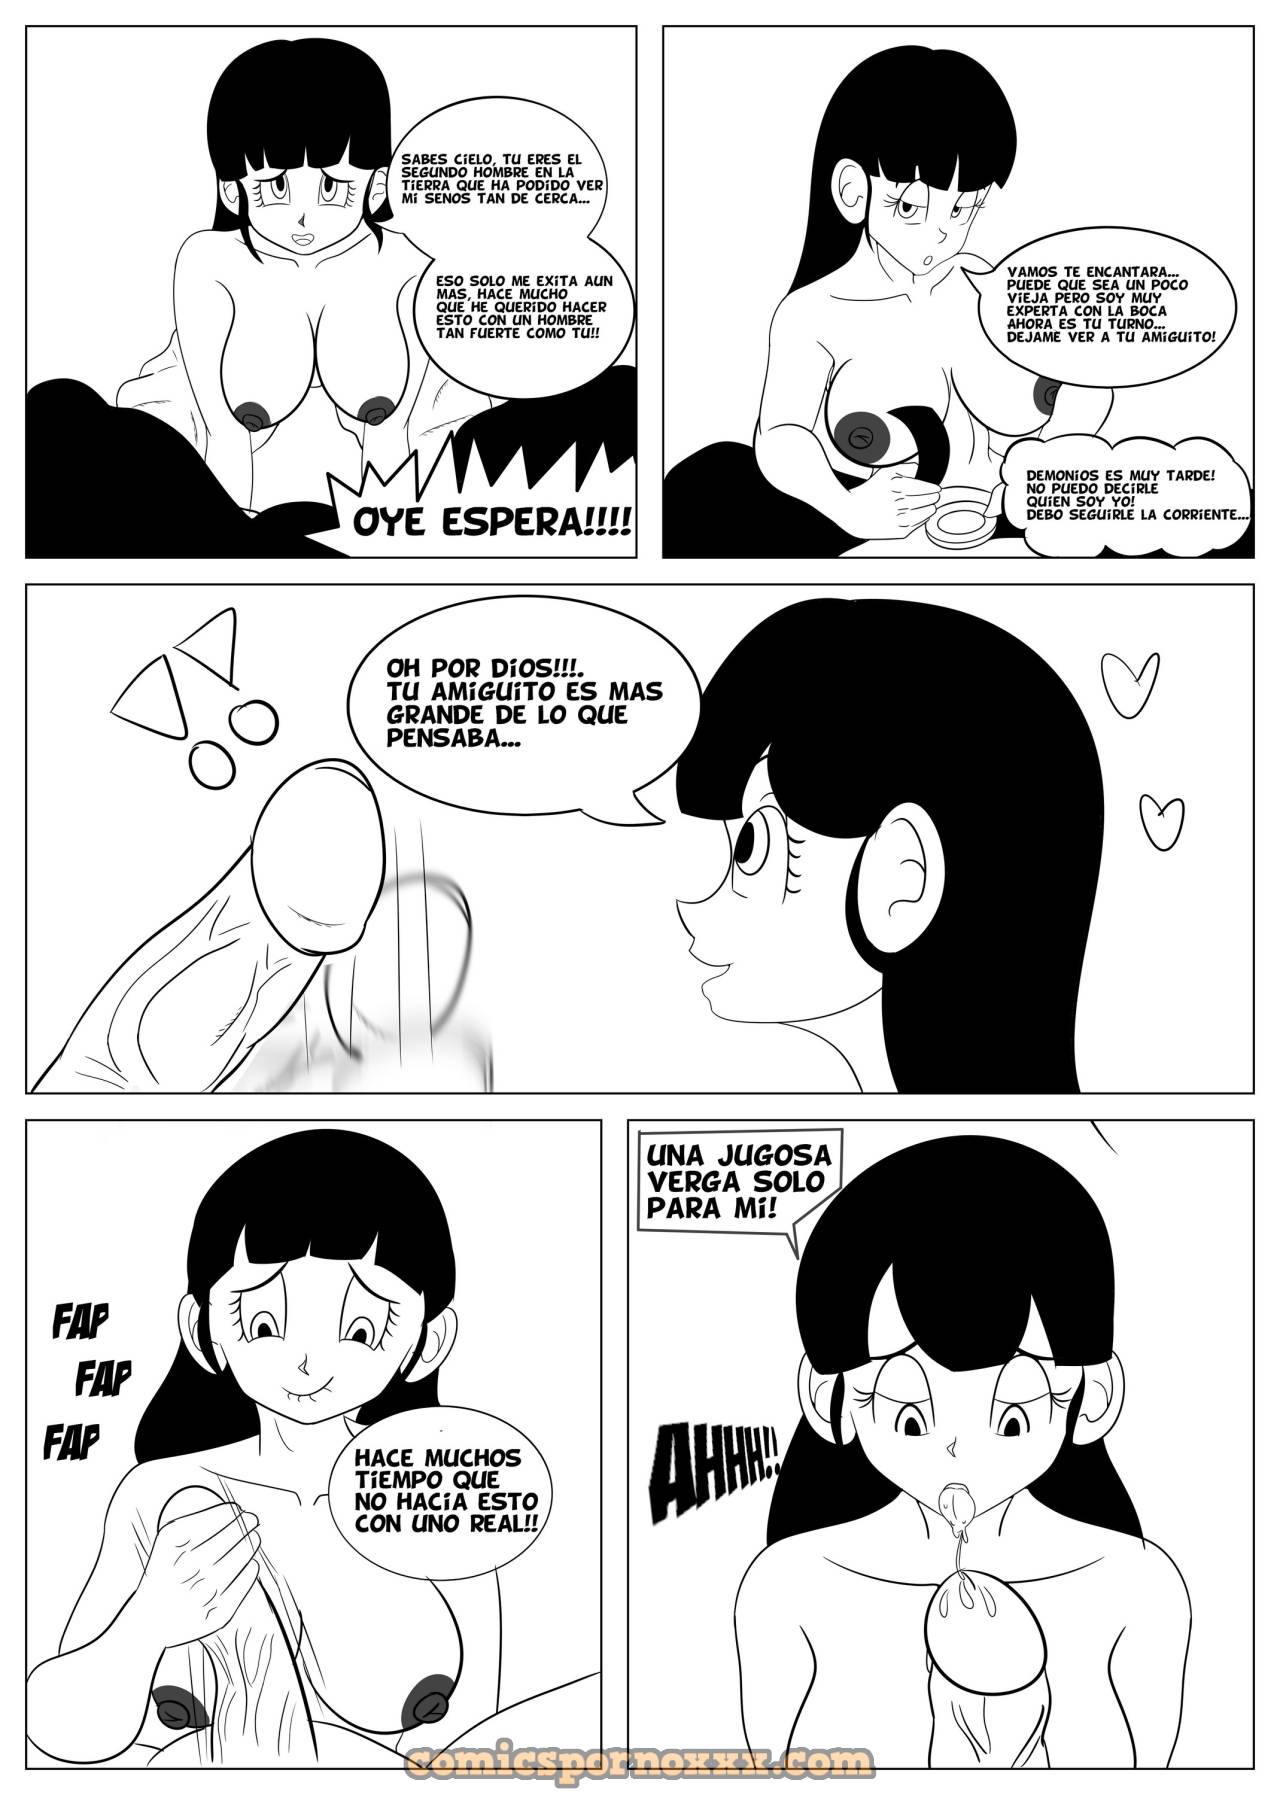 Malentendidos Familiares - 7 - Comics Porno - Hentai Manga - Cartoon XXX